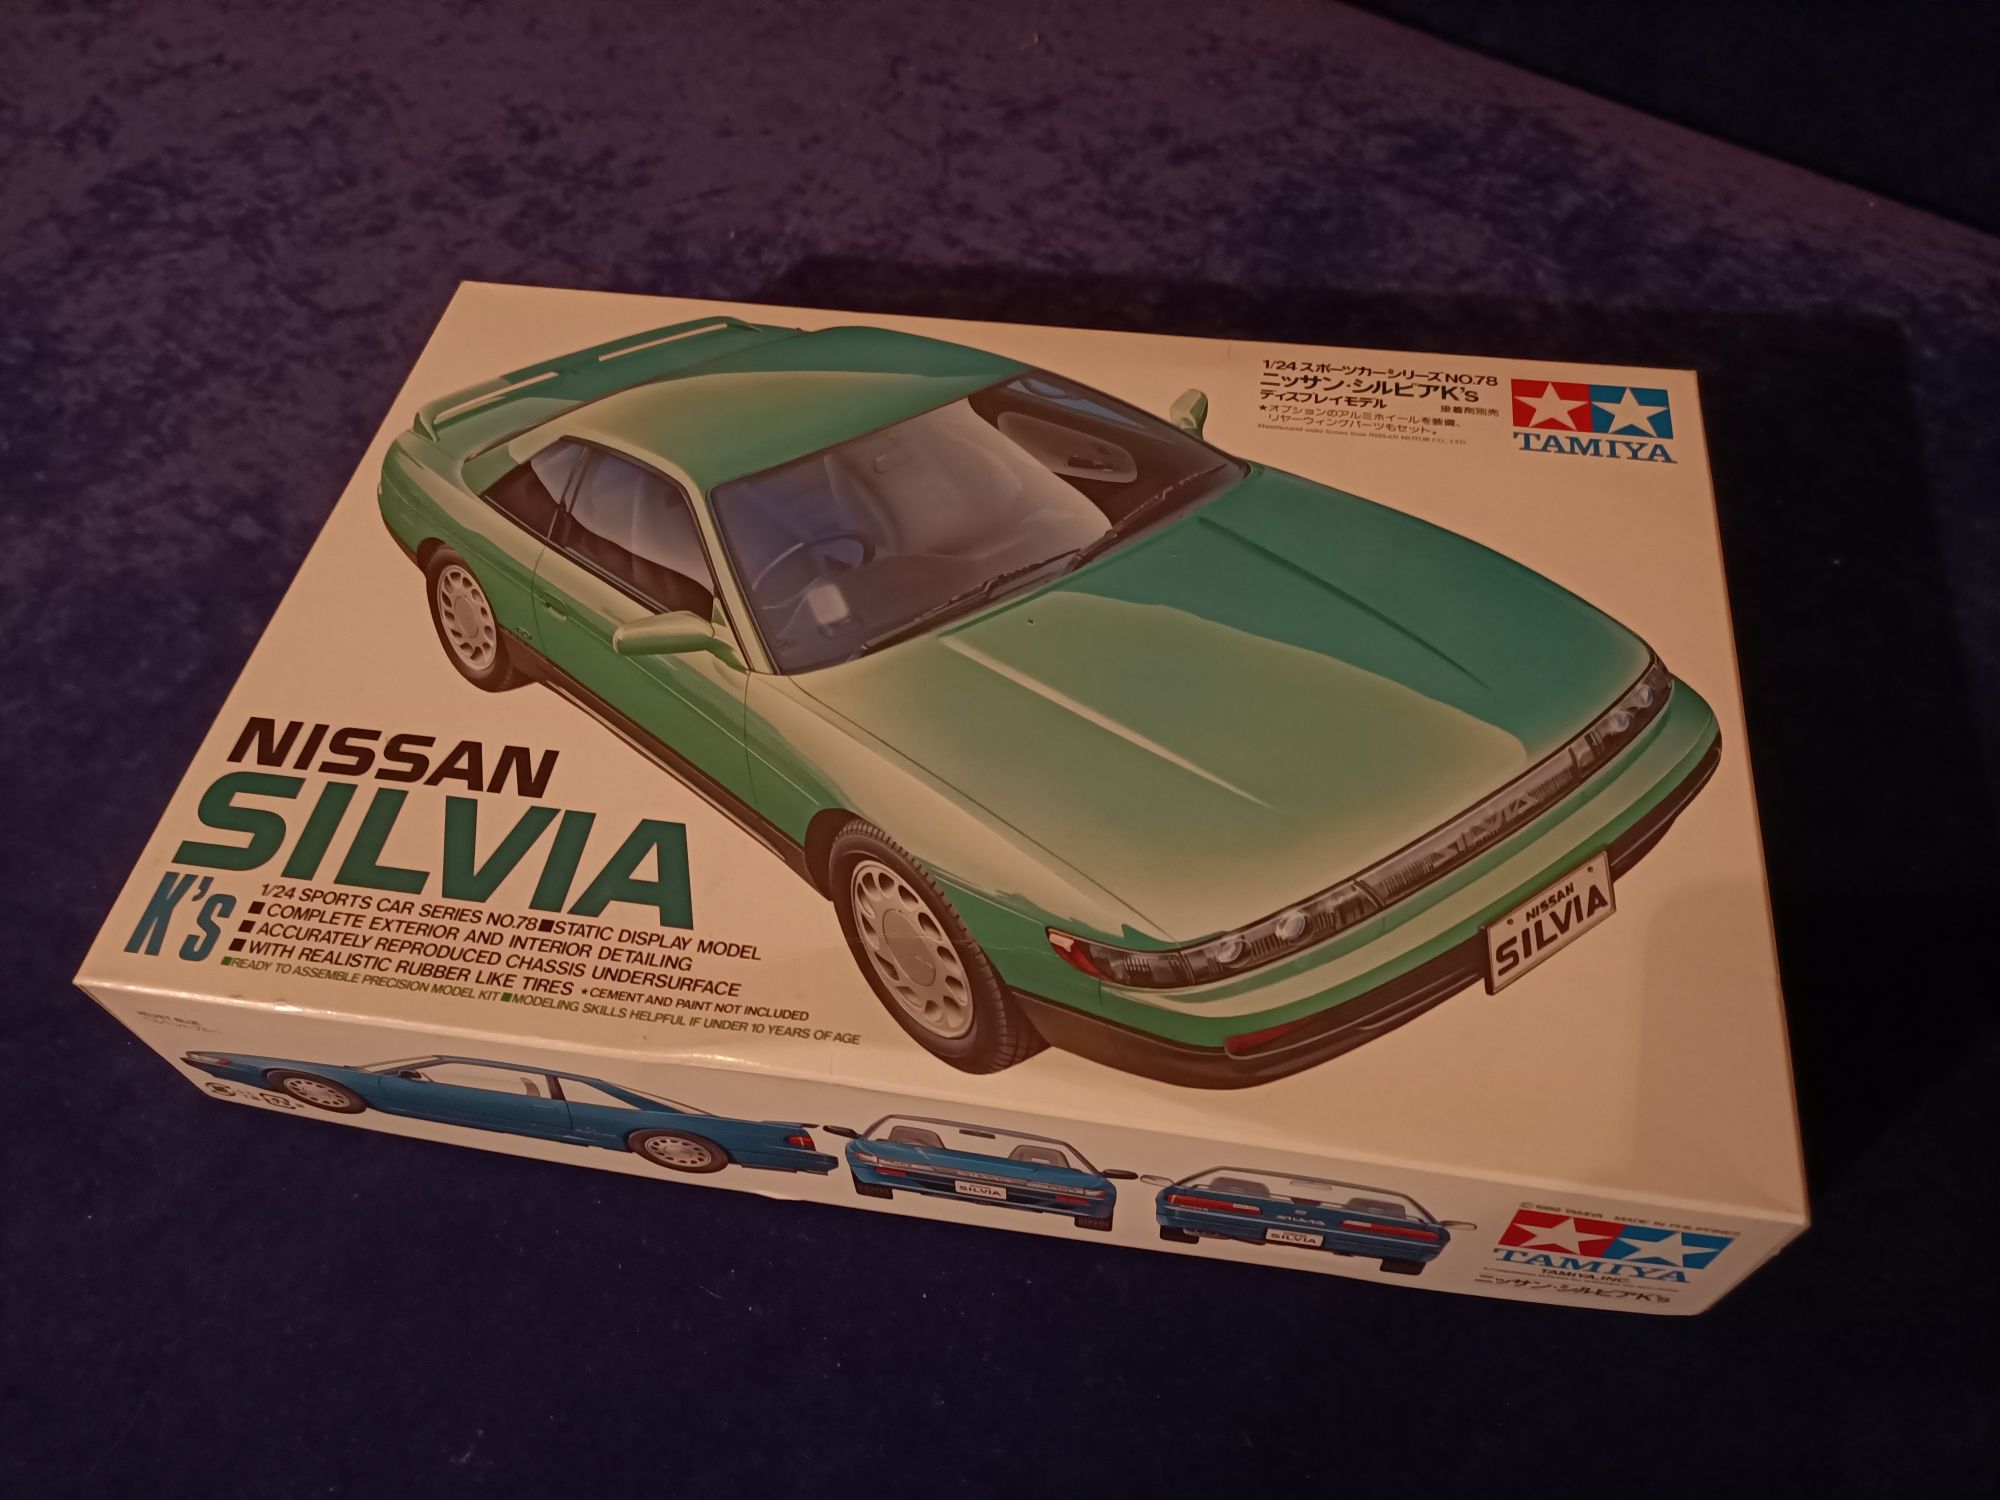 Nissan Silvia Tamiya